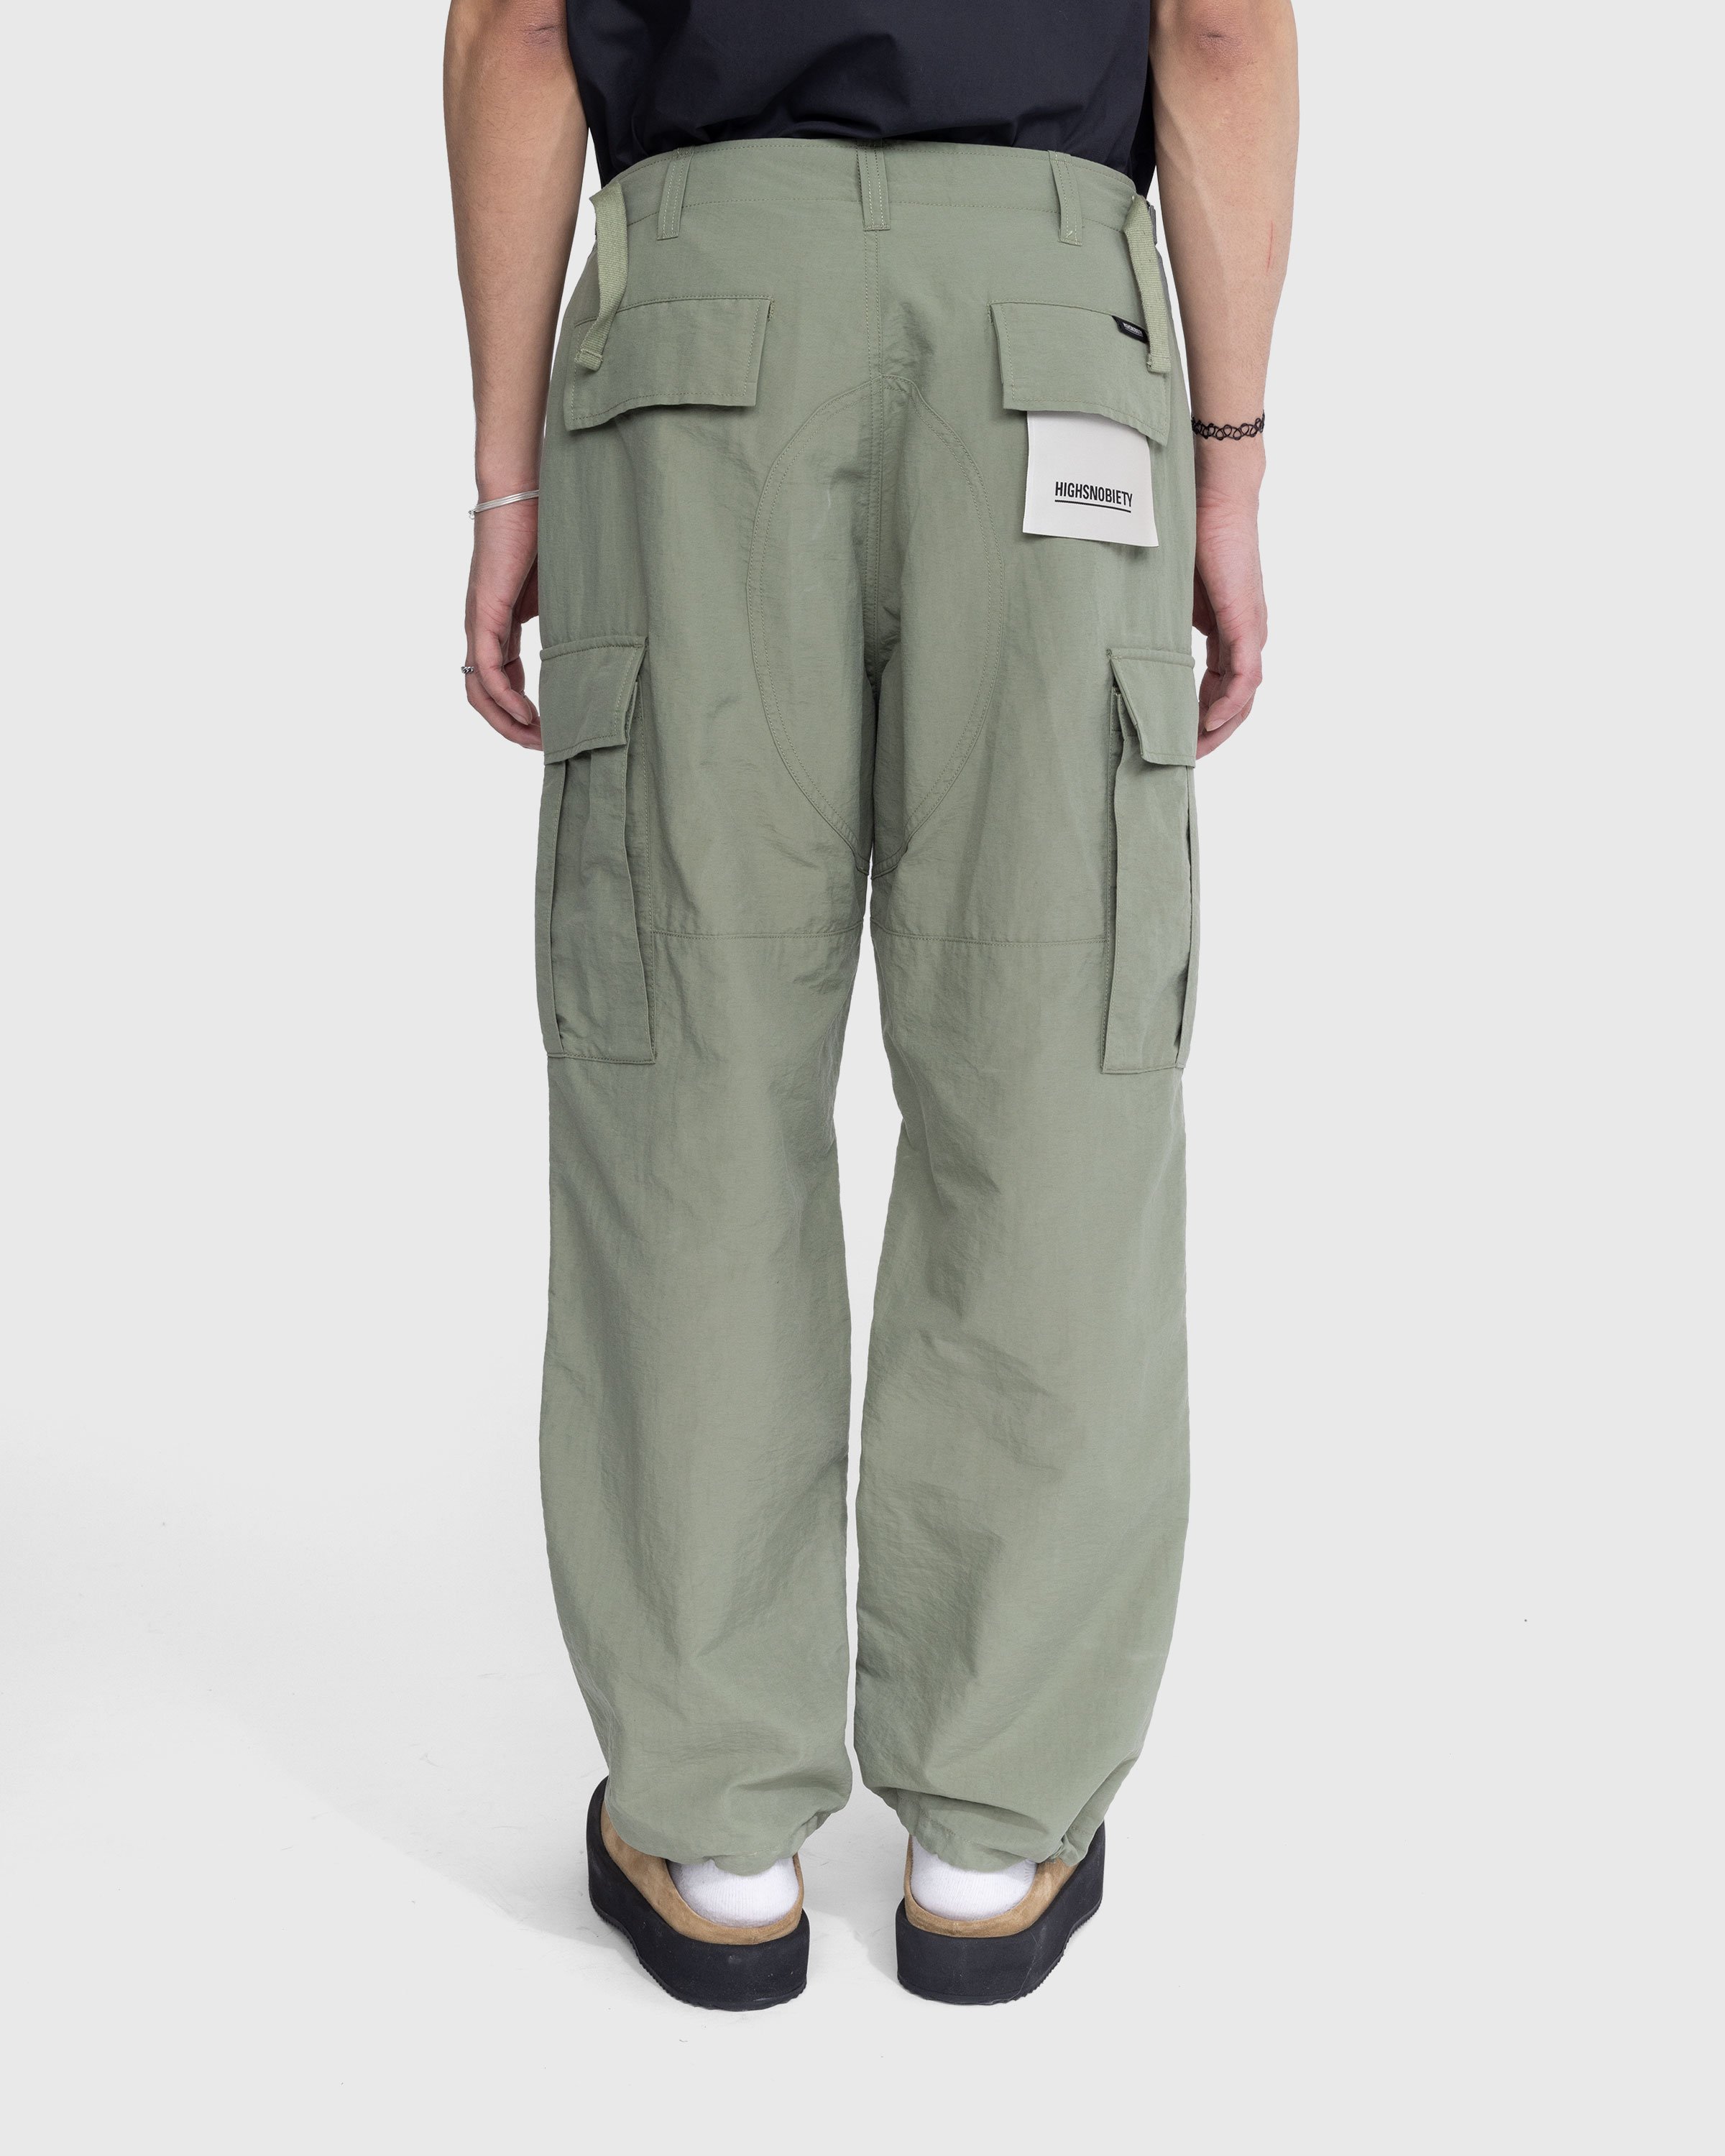 Highsnobiety - Nylon Cargo Pants Khaki - Clothing - Green - Image 3